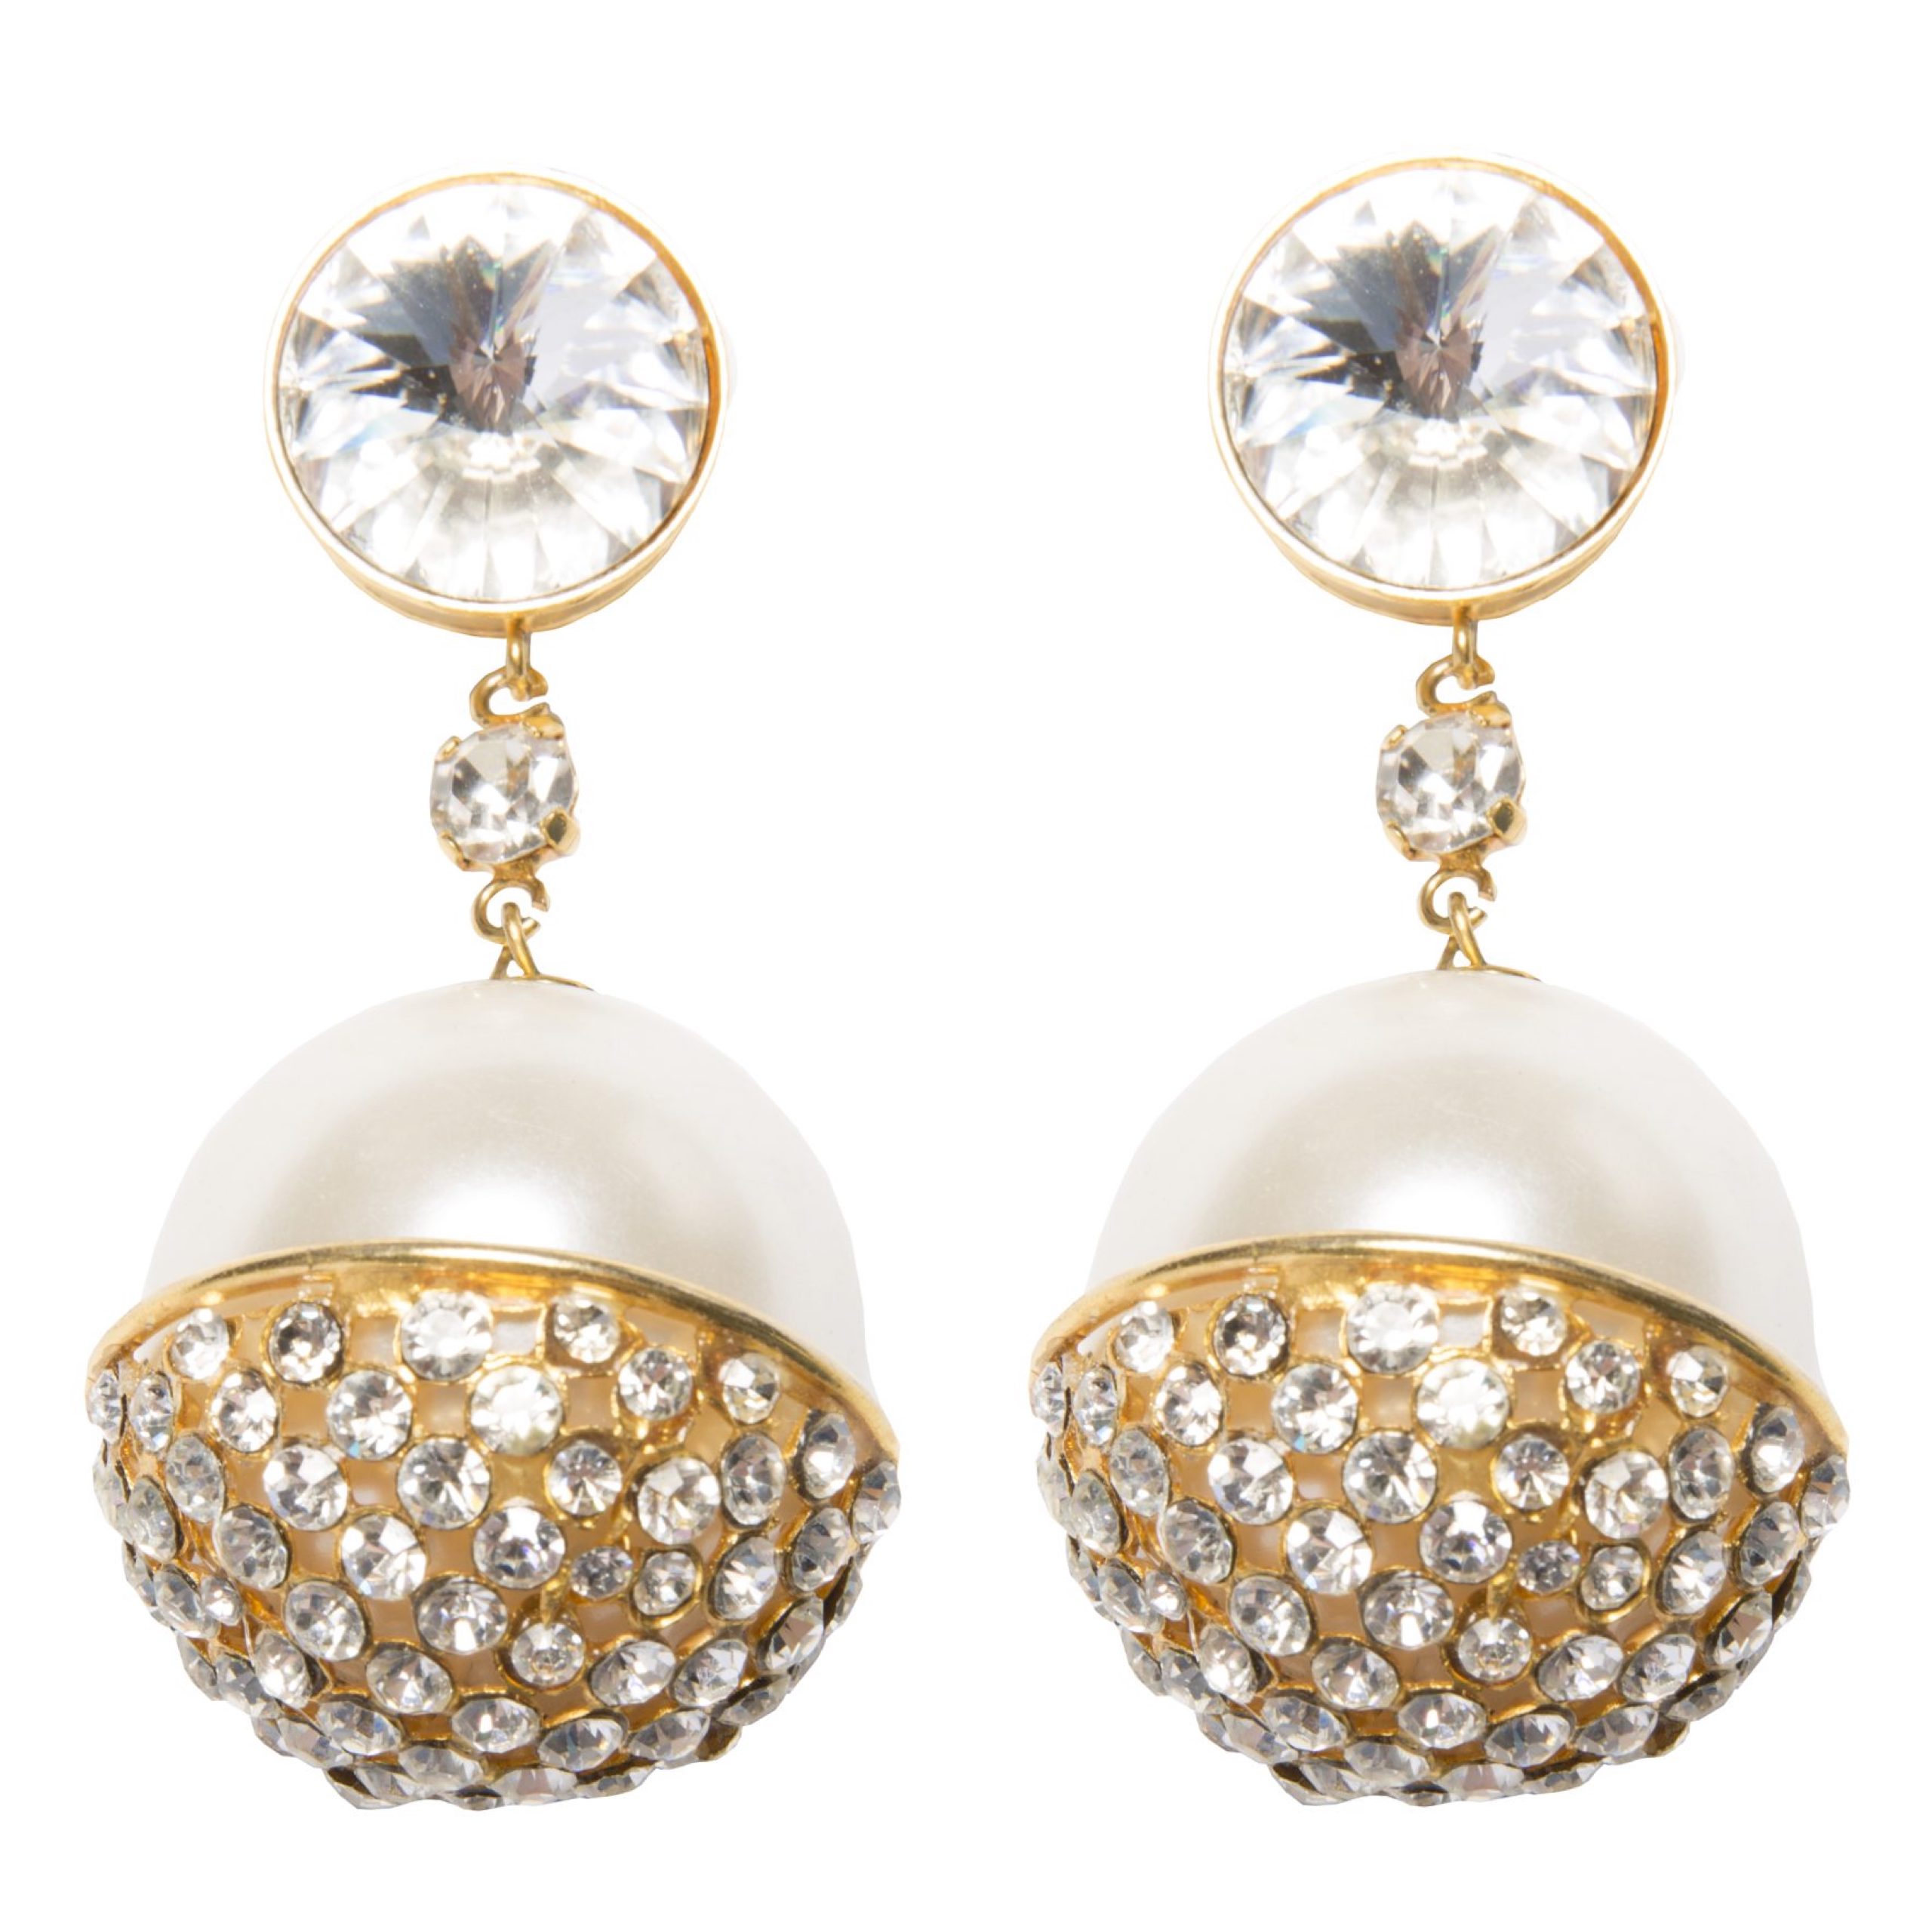 Vintage haute couture pearl drop earrings